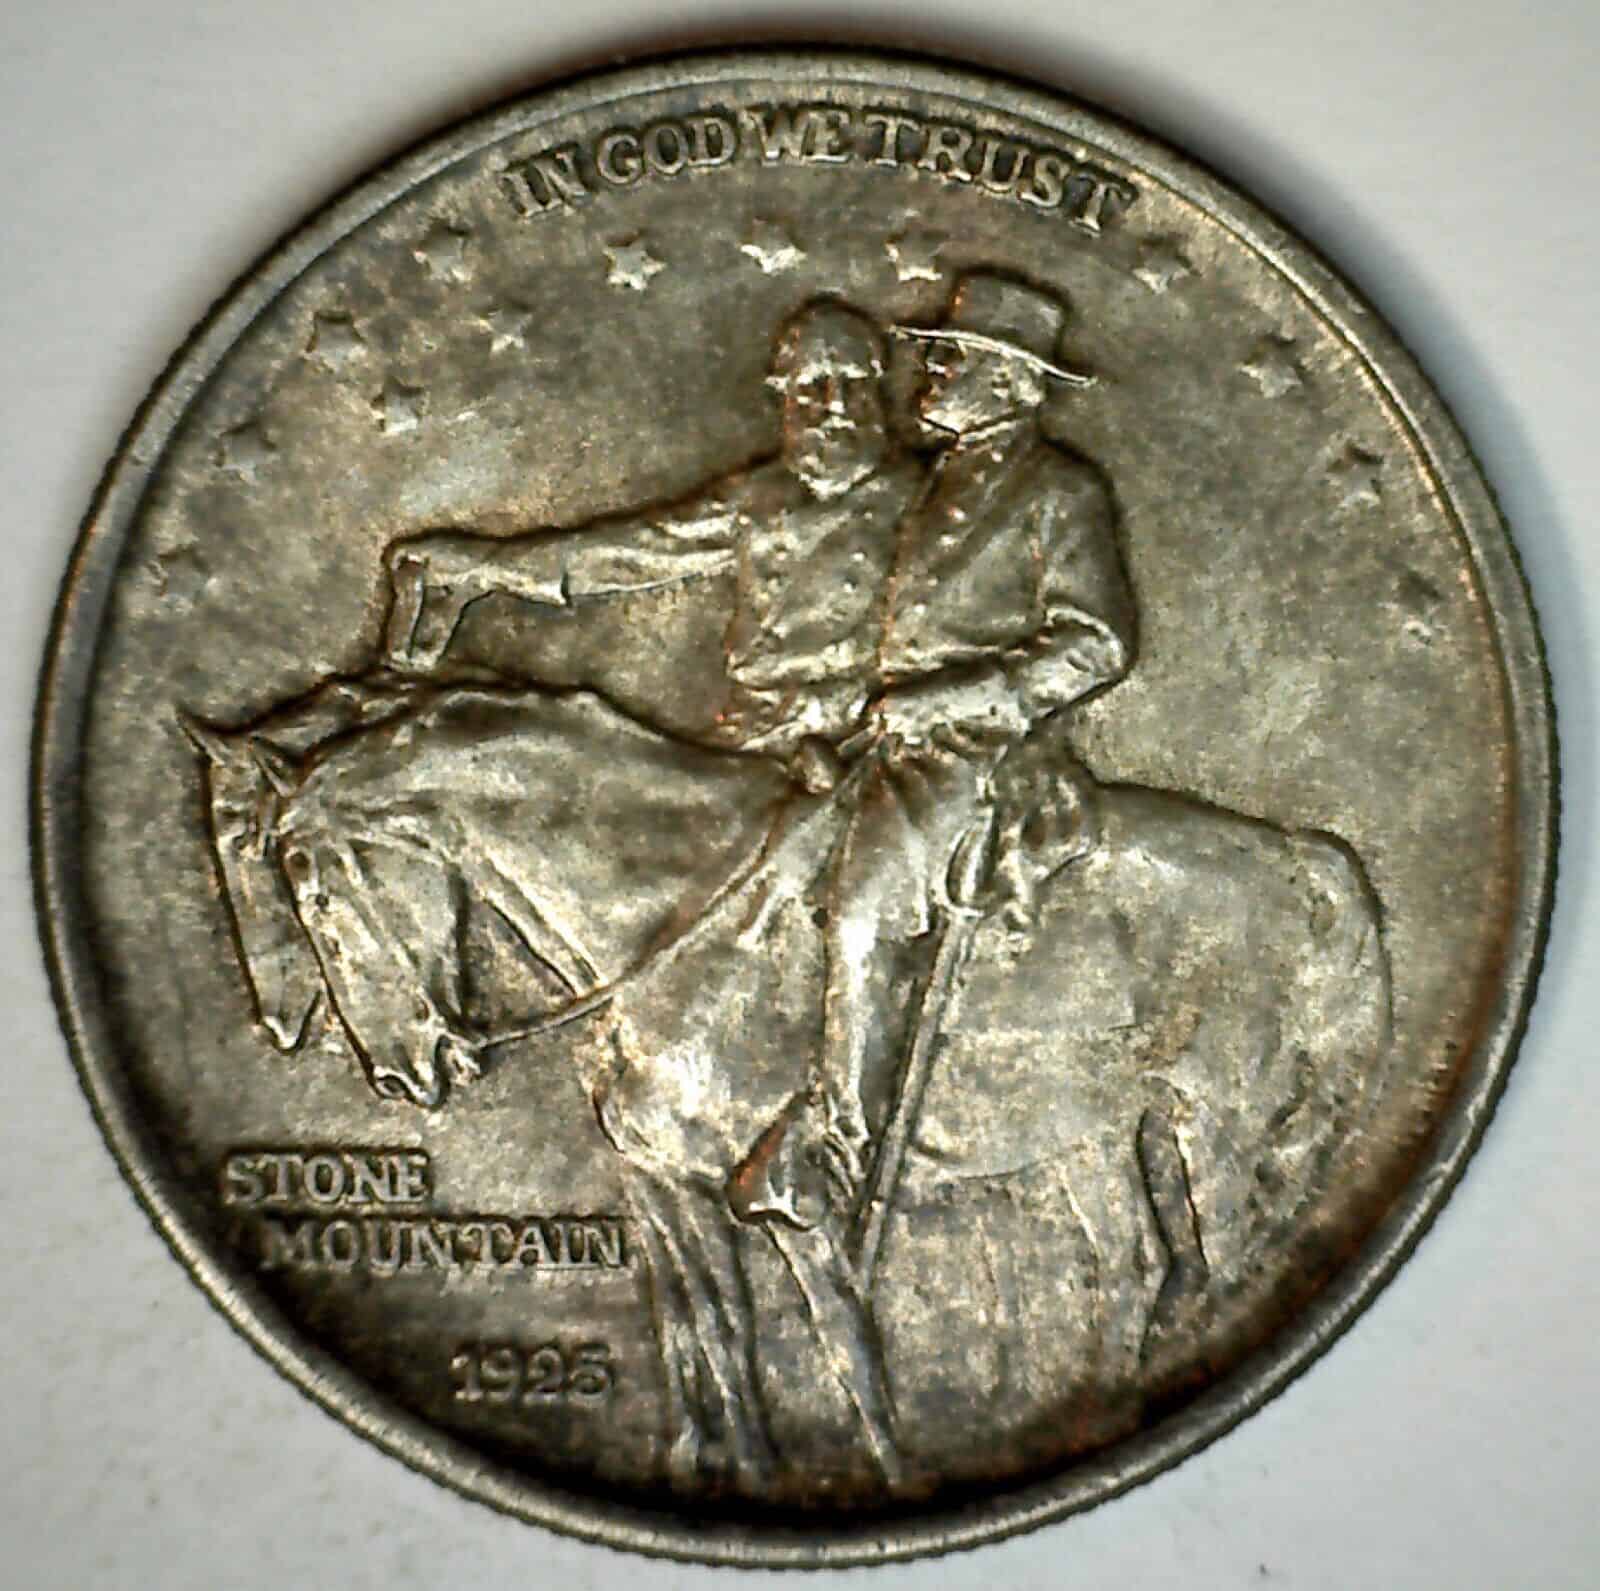 1925 Stone Mountain Half Dollar Value (Rare Errors)